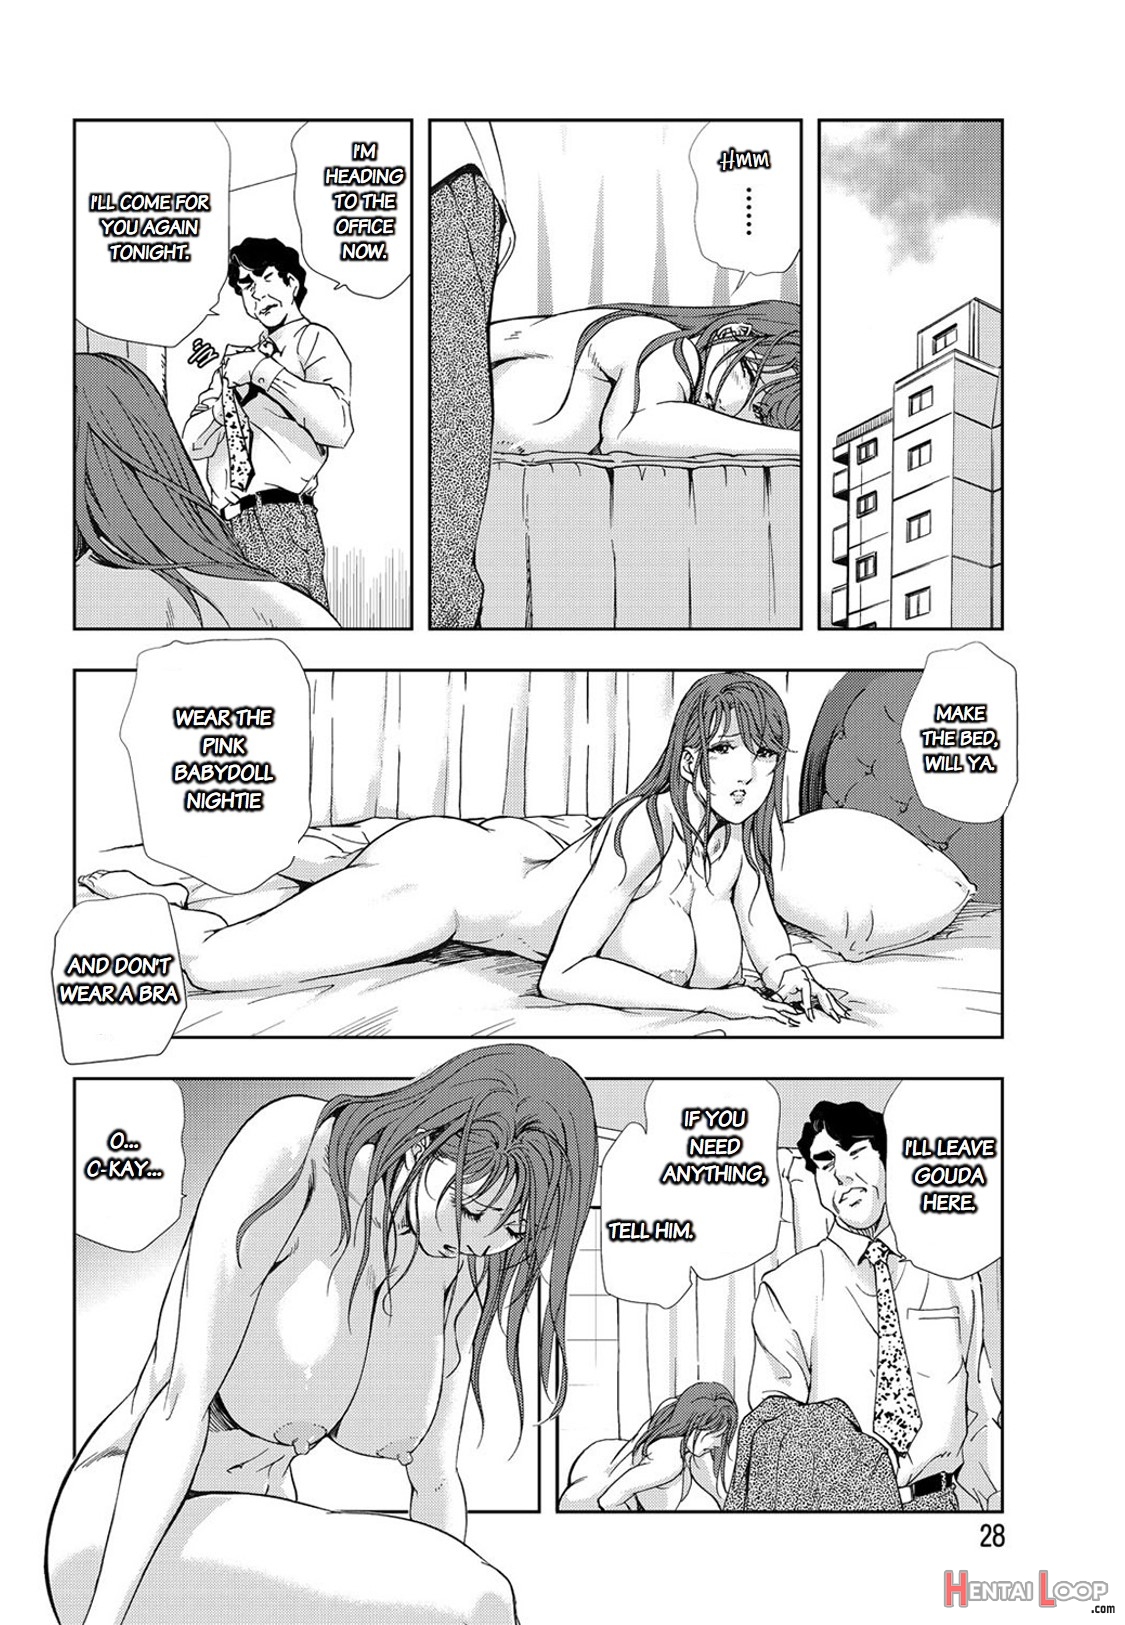 Nikuhisyo Yukiko Chapter 25-2 page 18